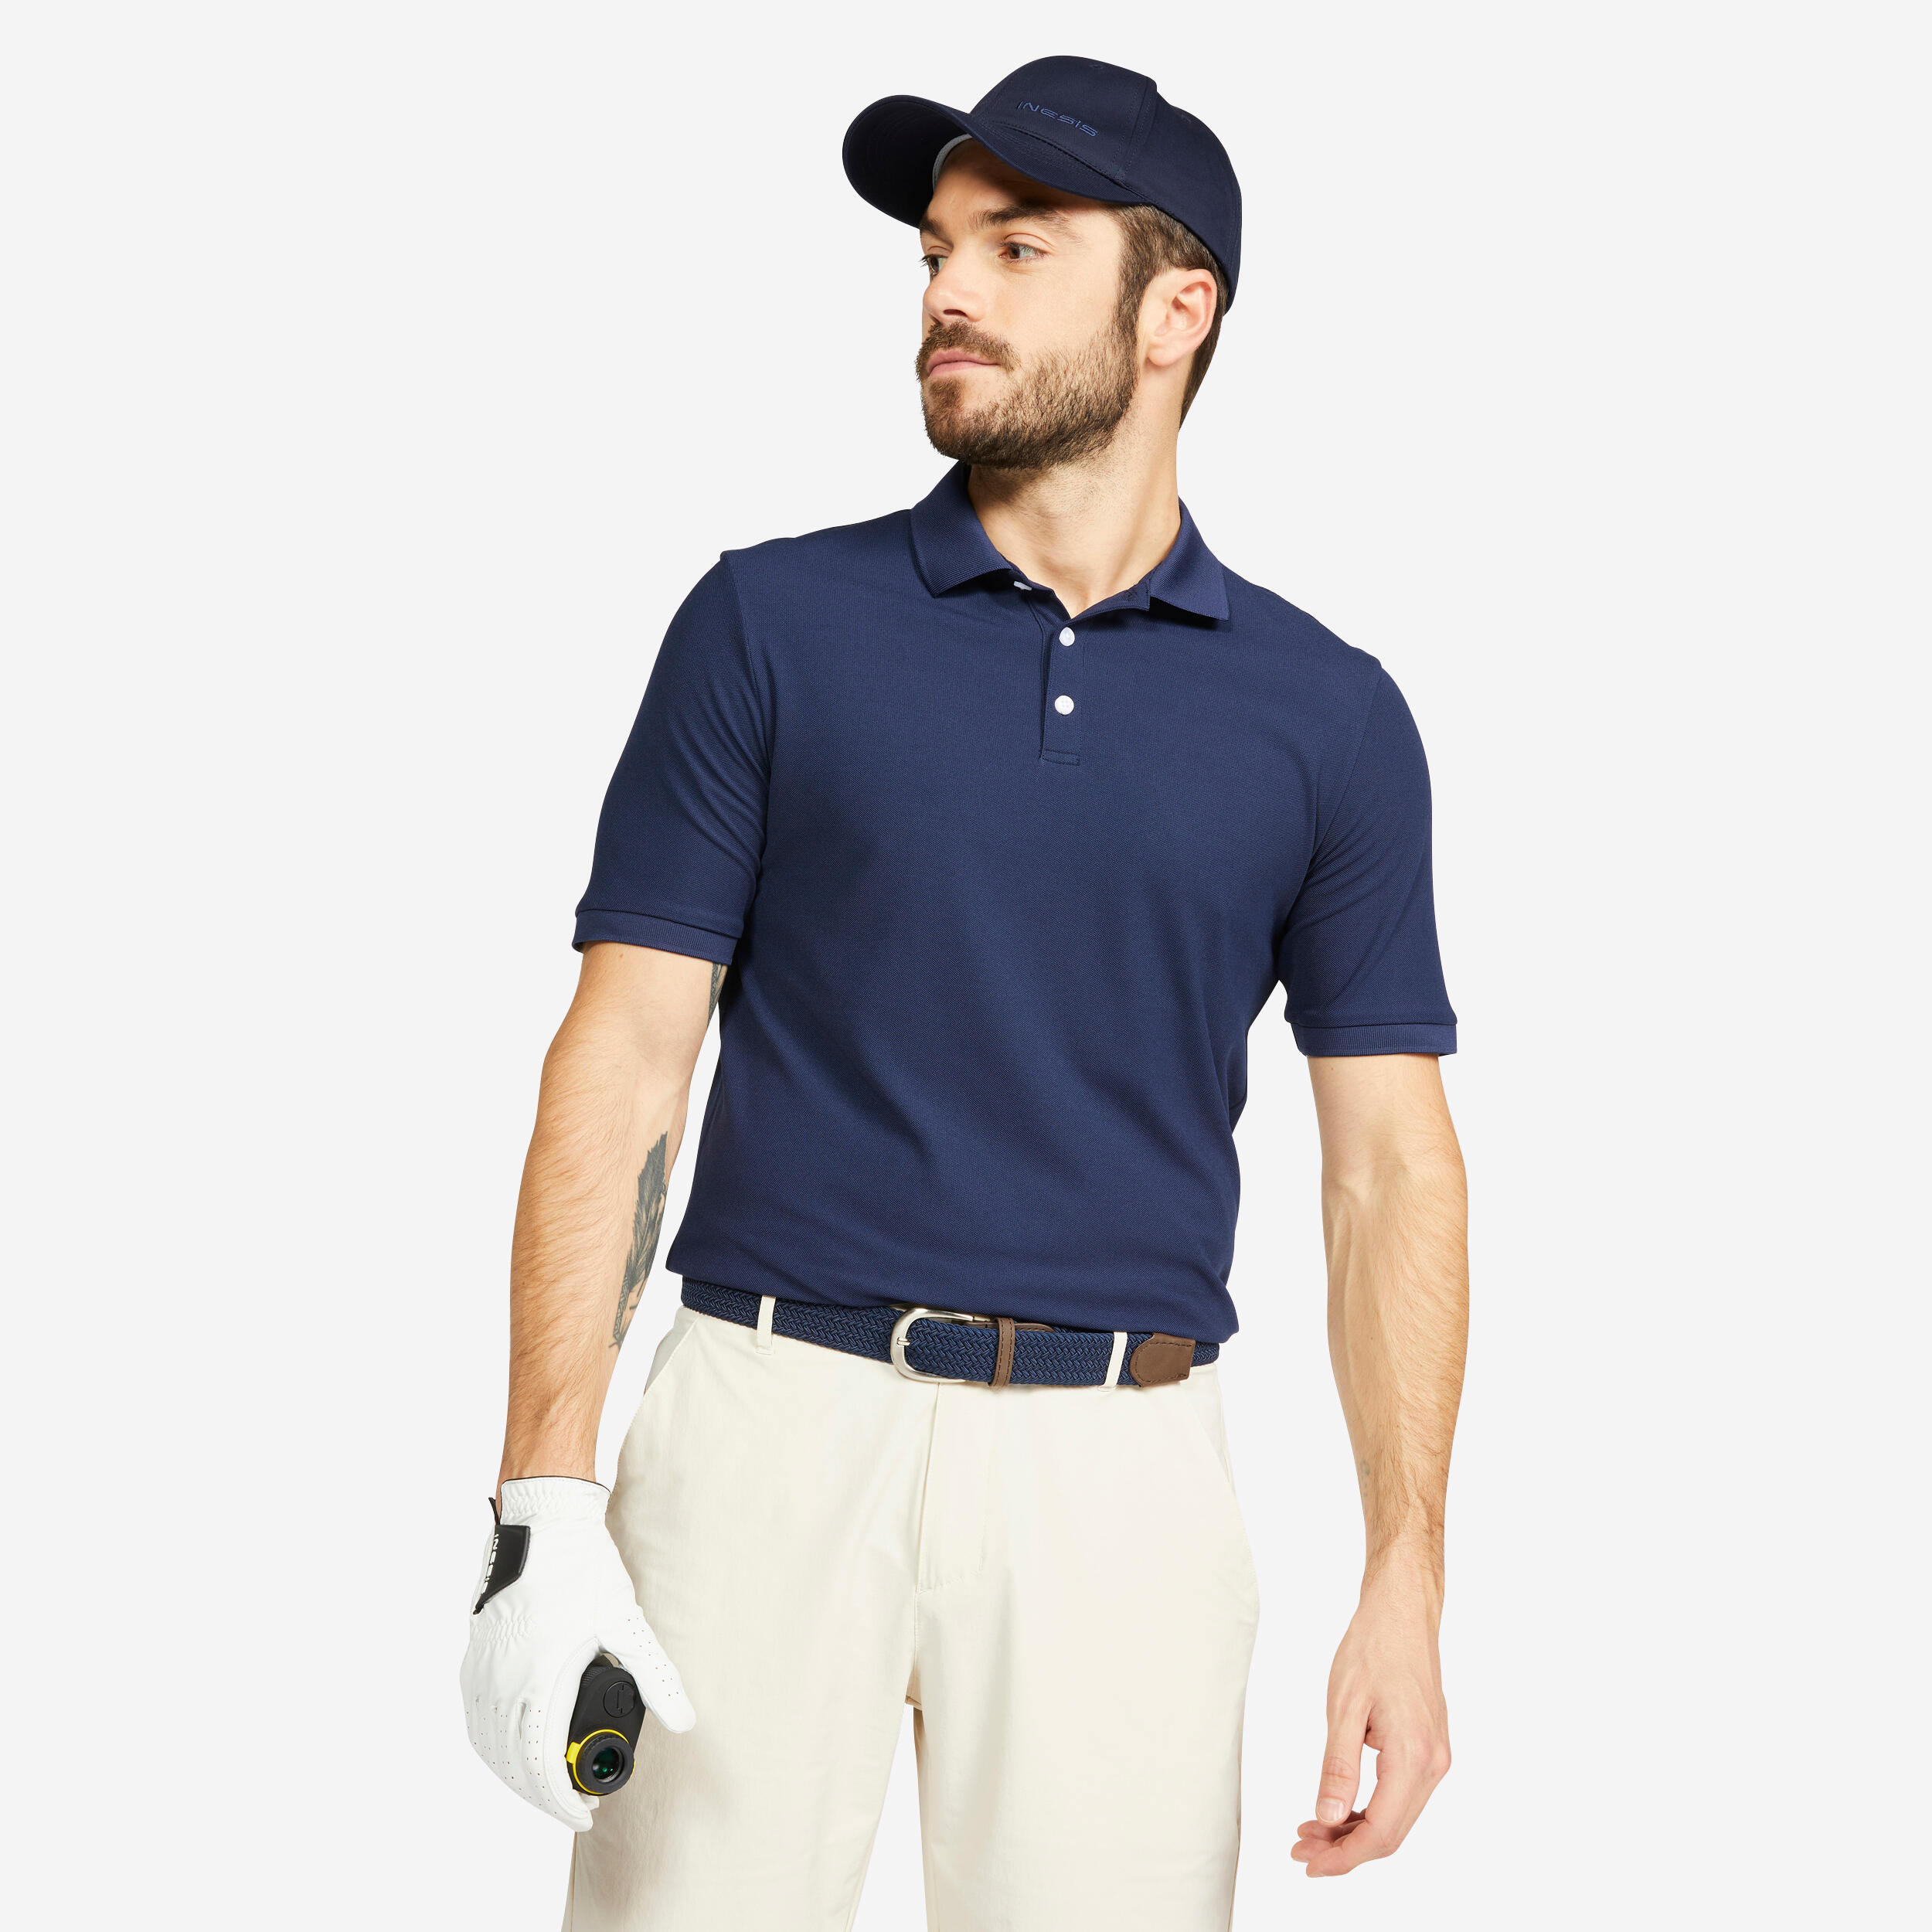 Polo de golf homme – WW 500 bleu marine - INESIS